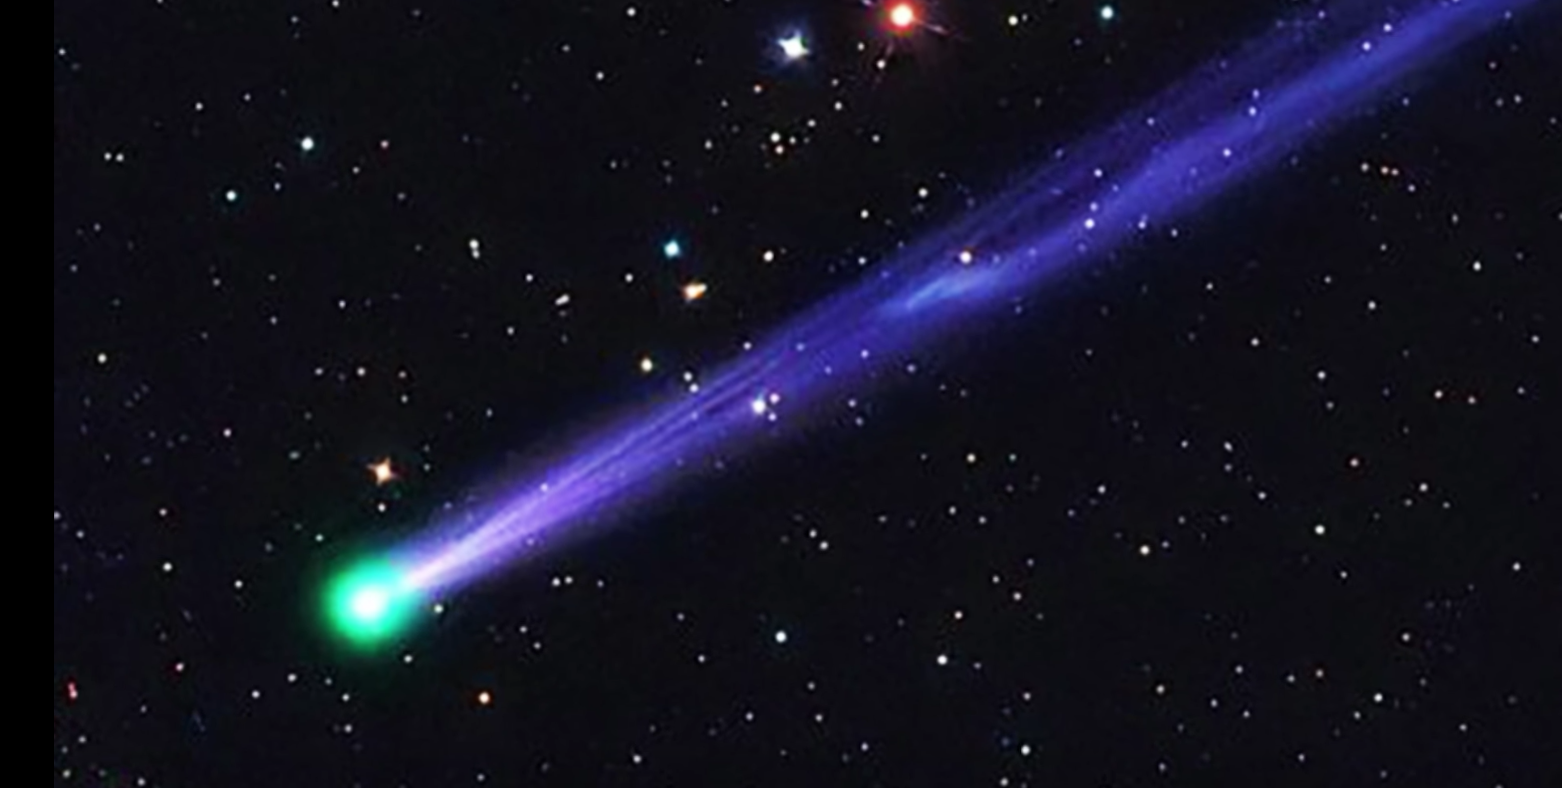 Comet 45p Eclipse Comet Full Moon Share Friday Nights Sky Cbs News